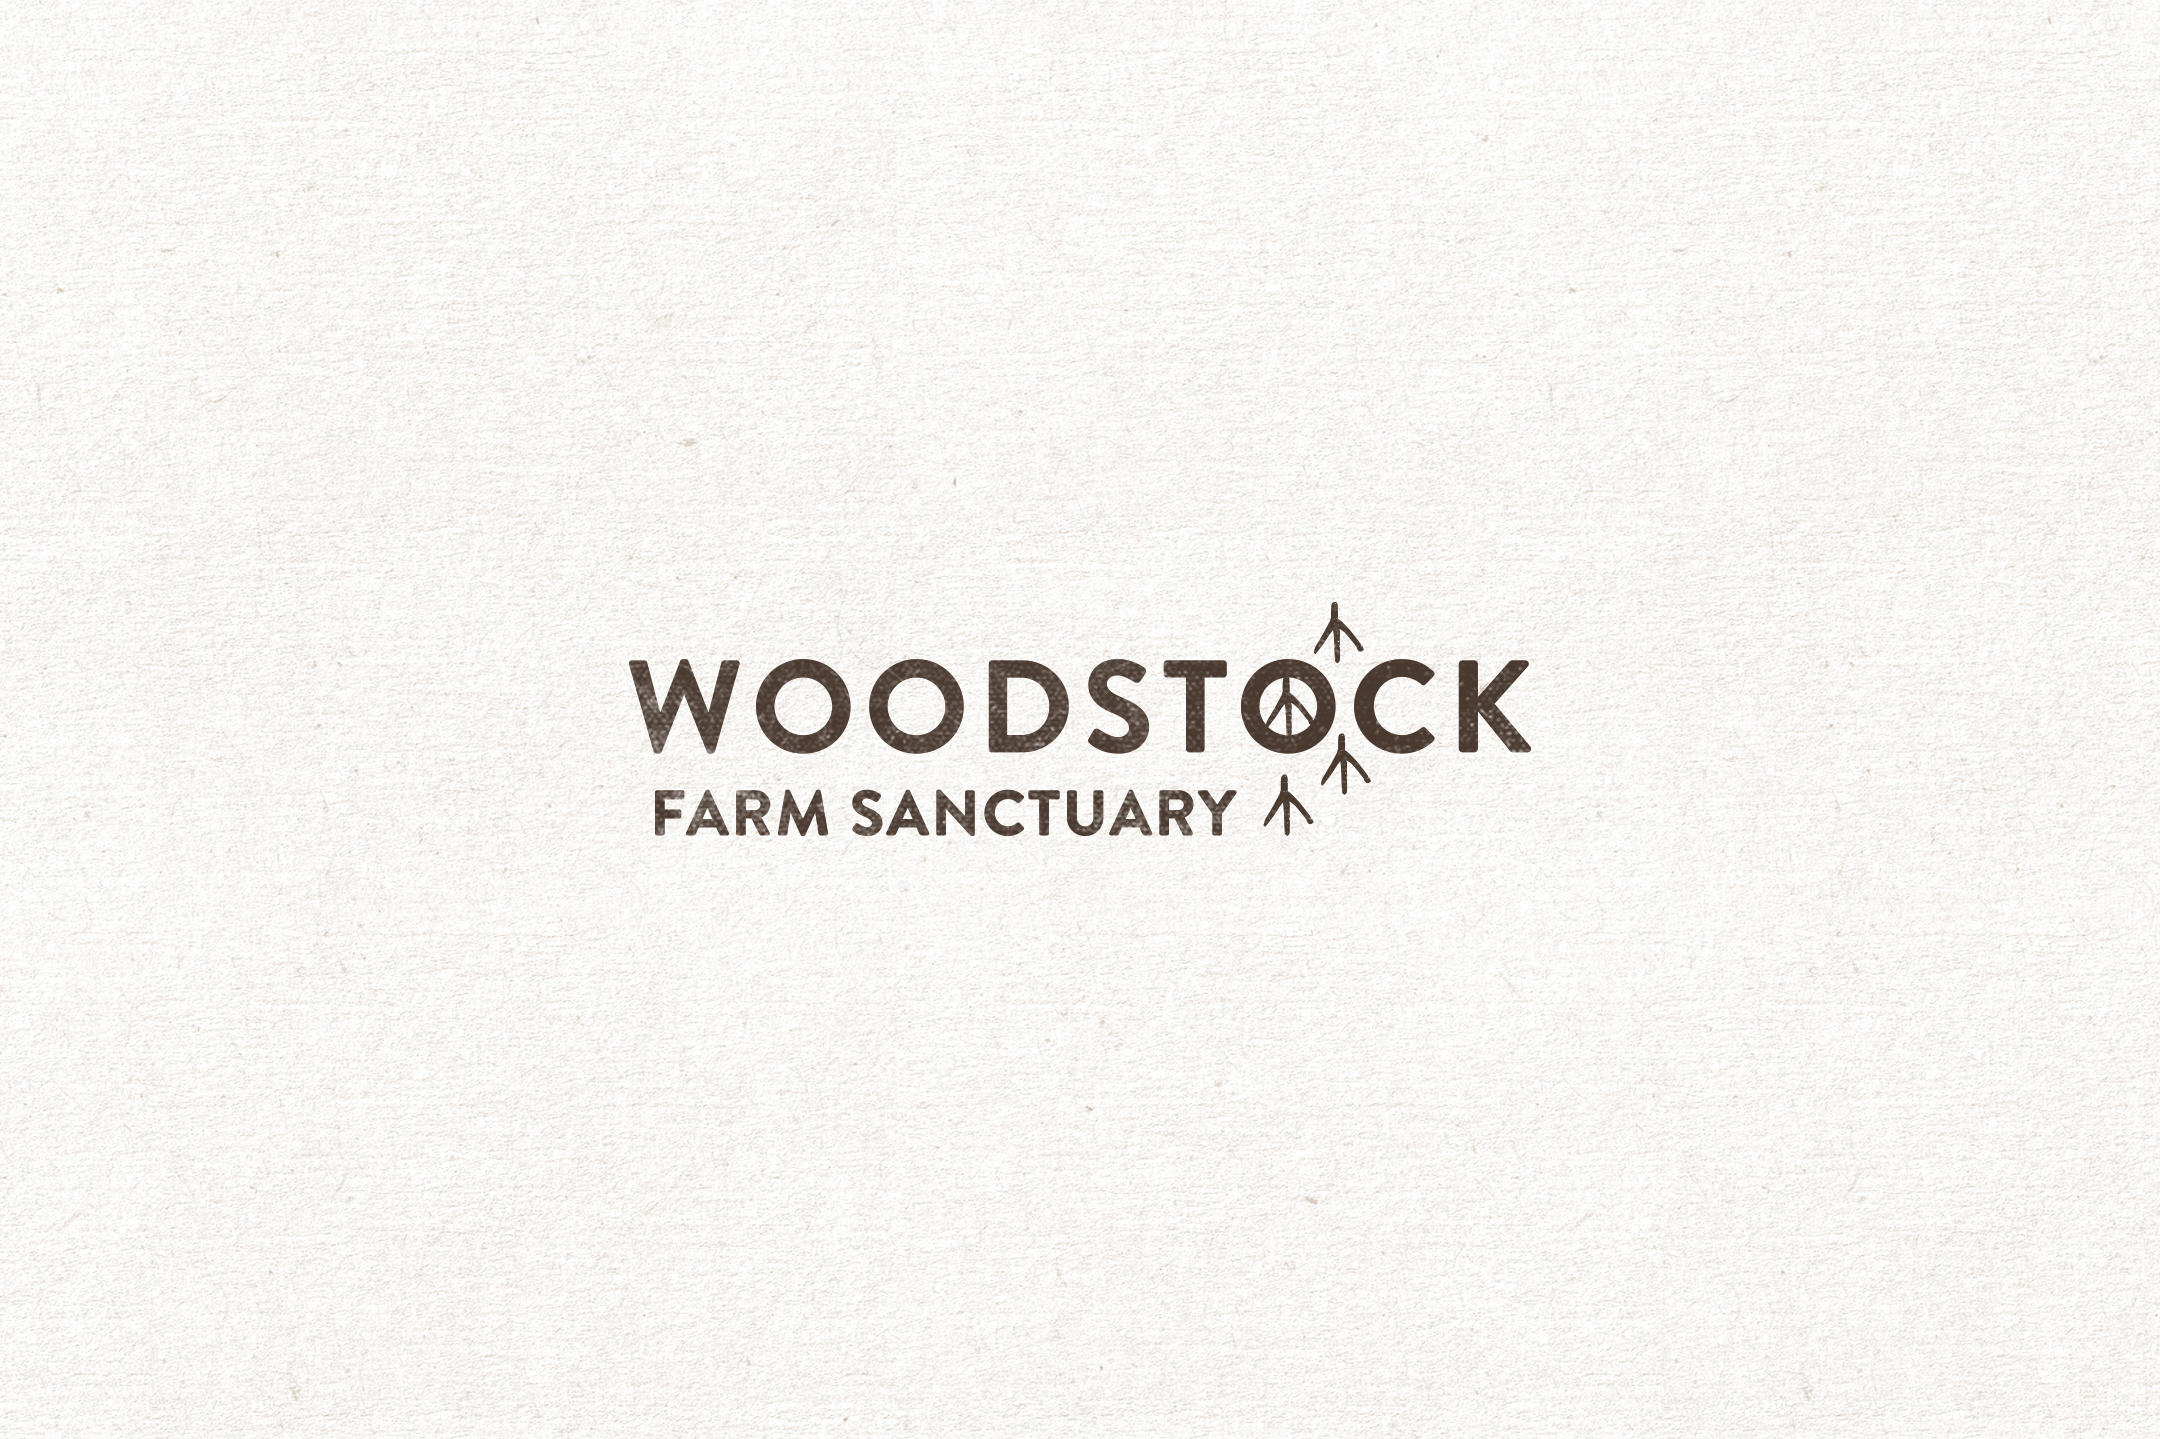 Woodstock Farm Sanctuary Logo by The Artful Union